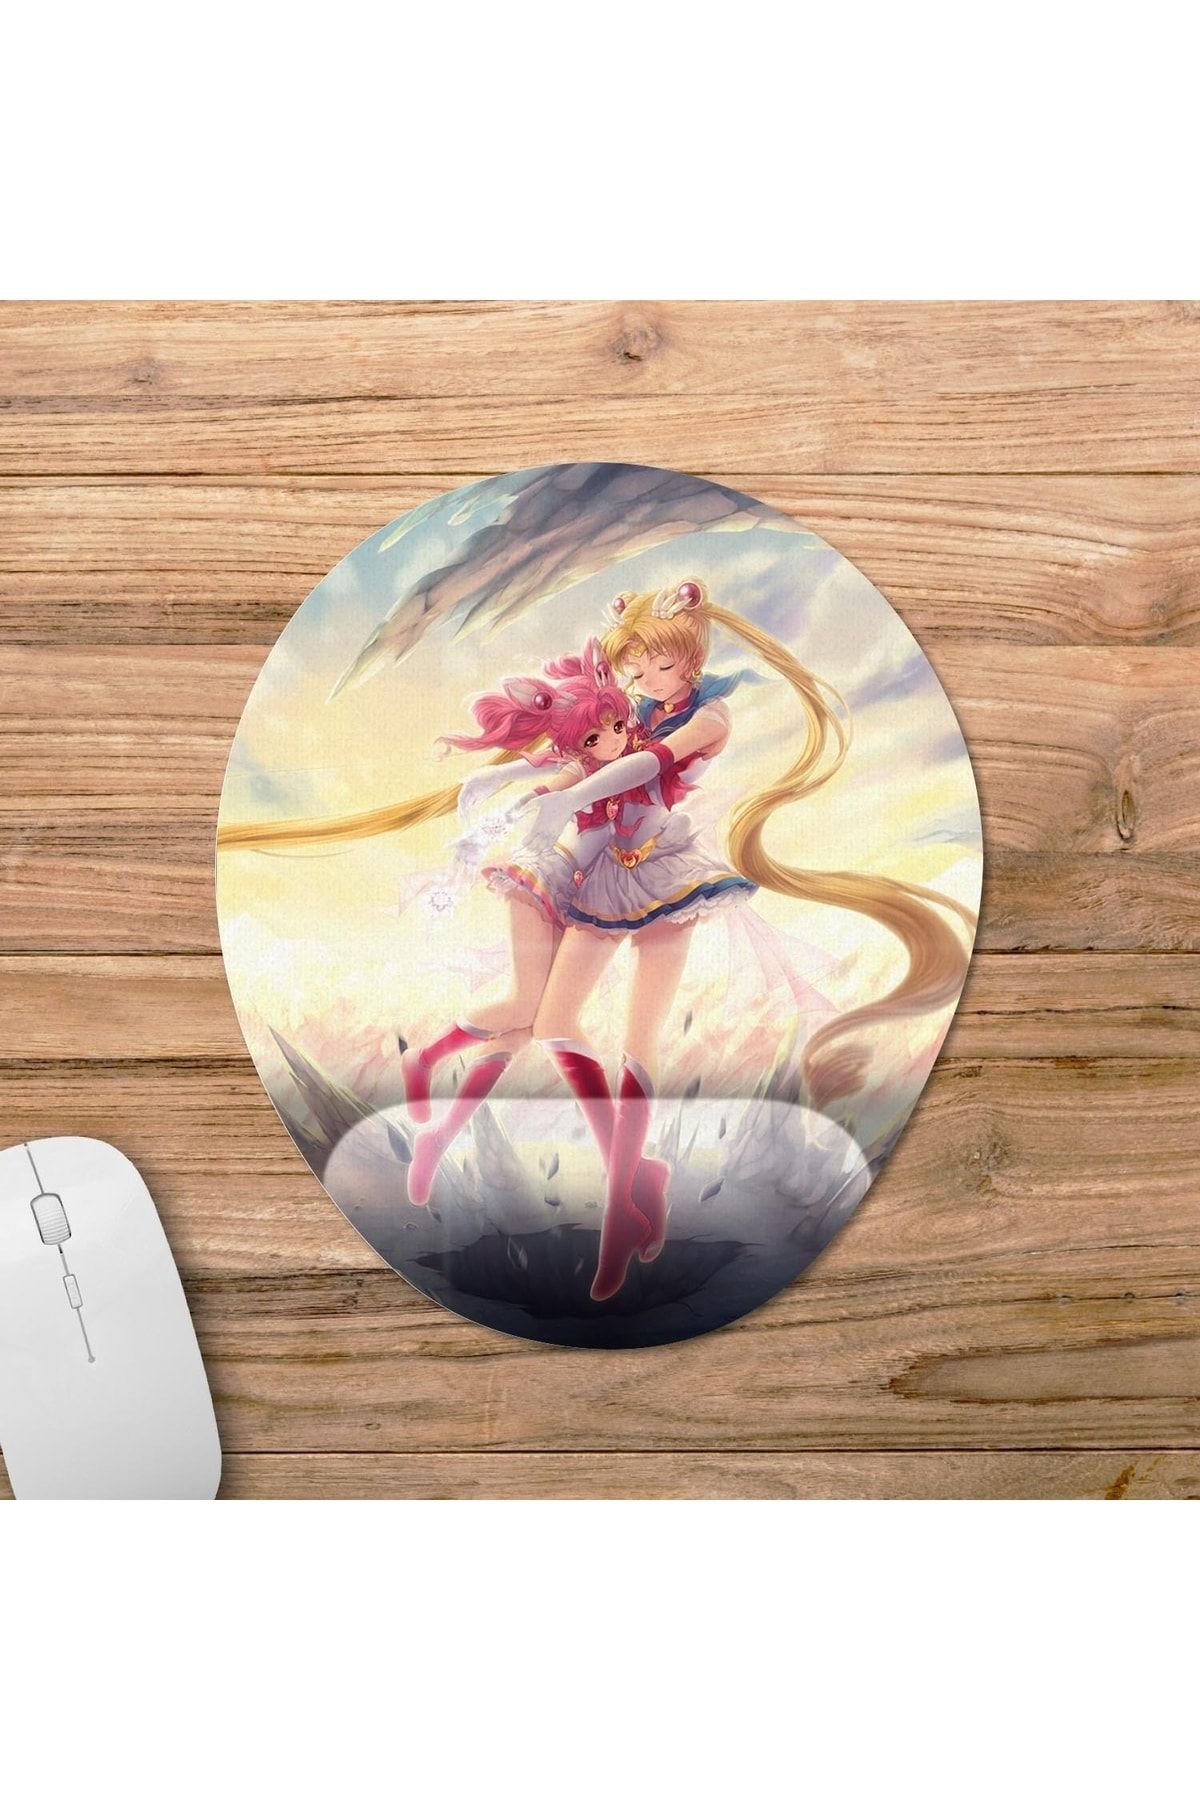 Pixxa Sailor Moon Bilek Destekli Mousepad Model - 4 Oval